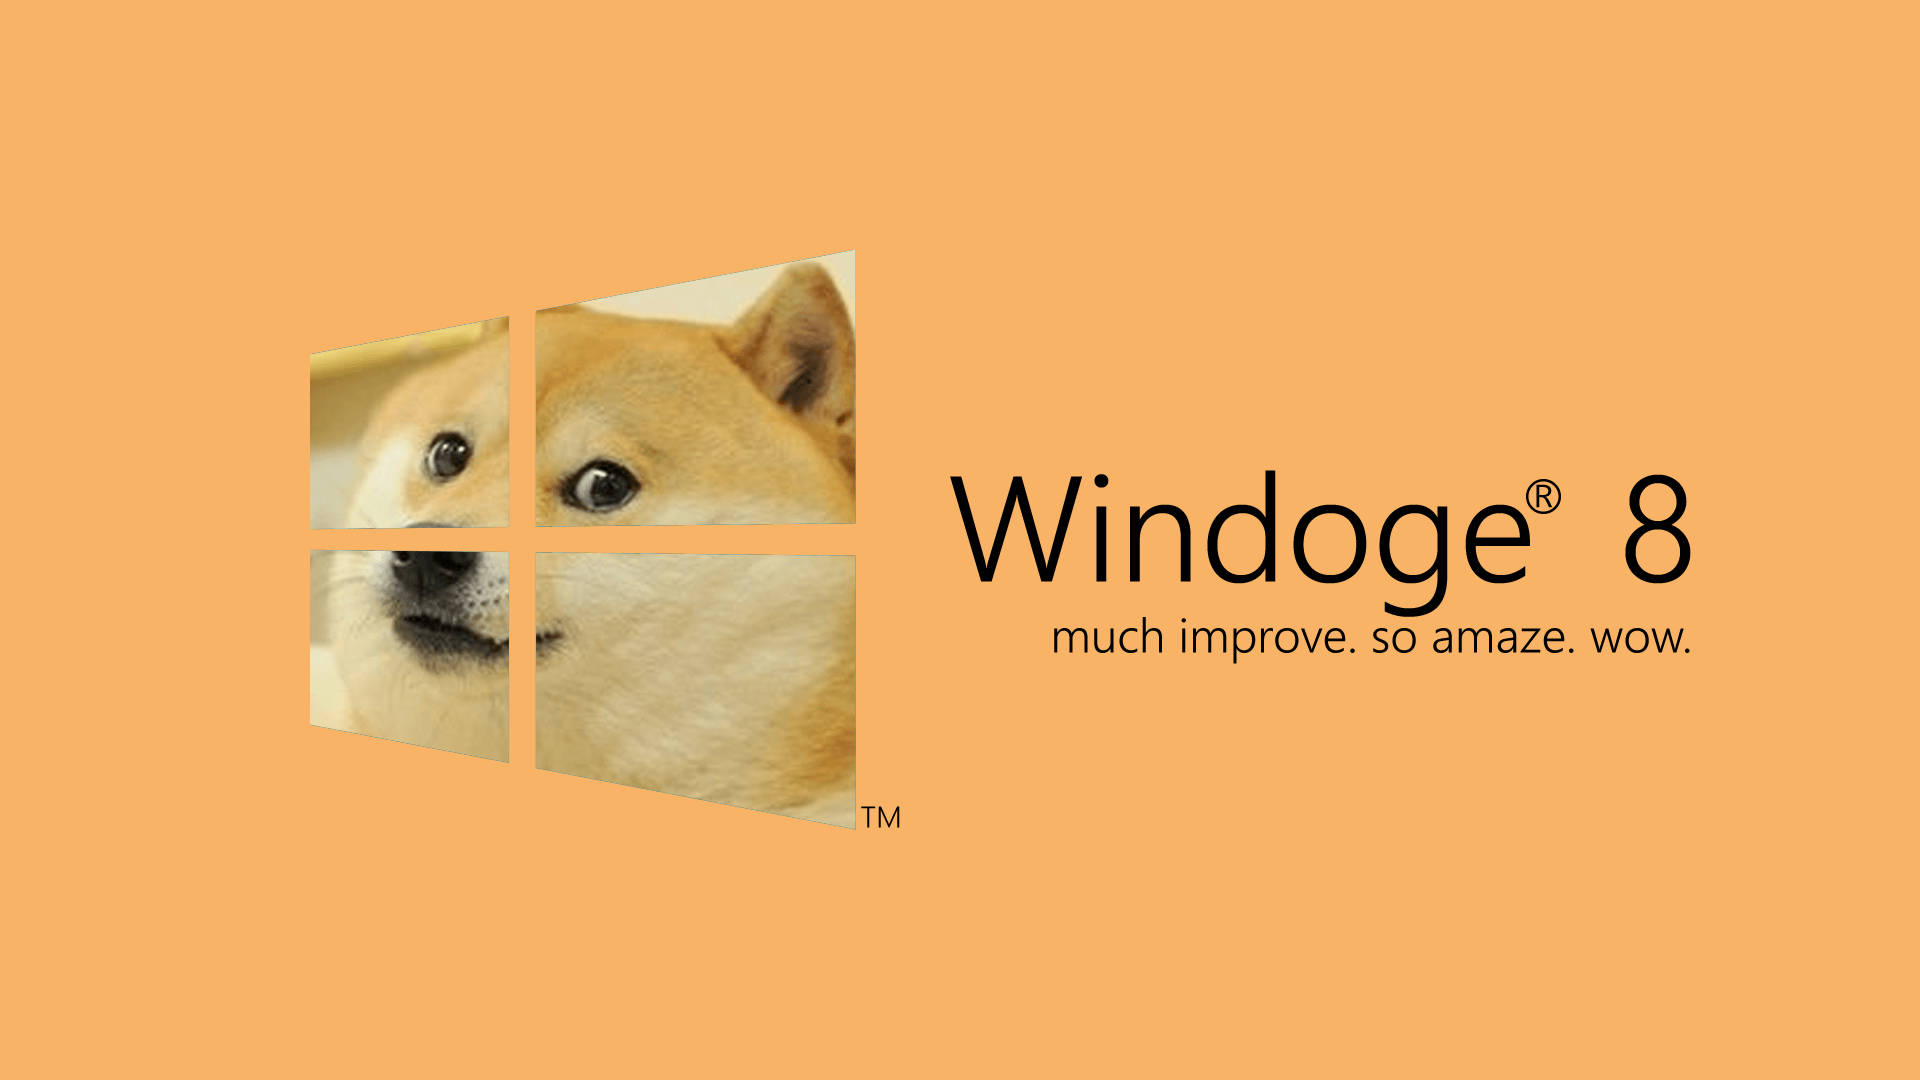 Doge meme as windows 8 desktop logo with his face on cut rectangles wallpaper.